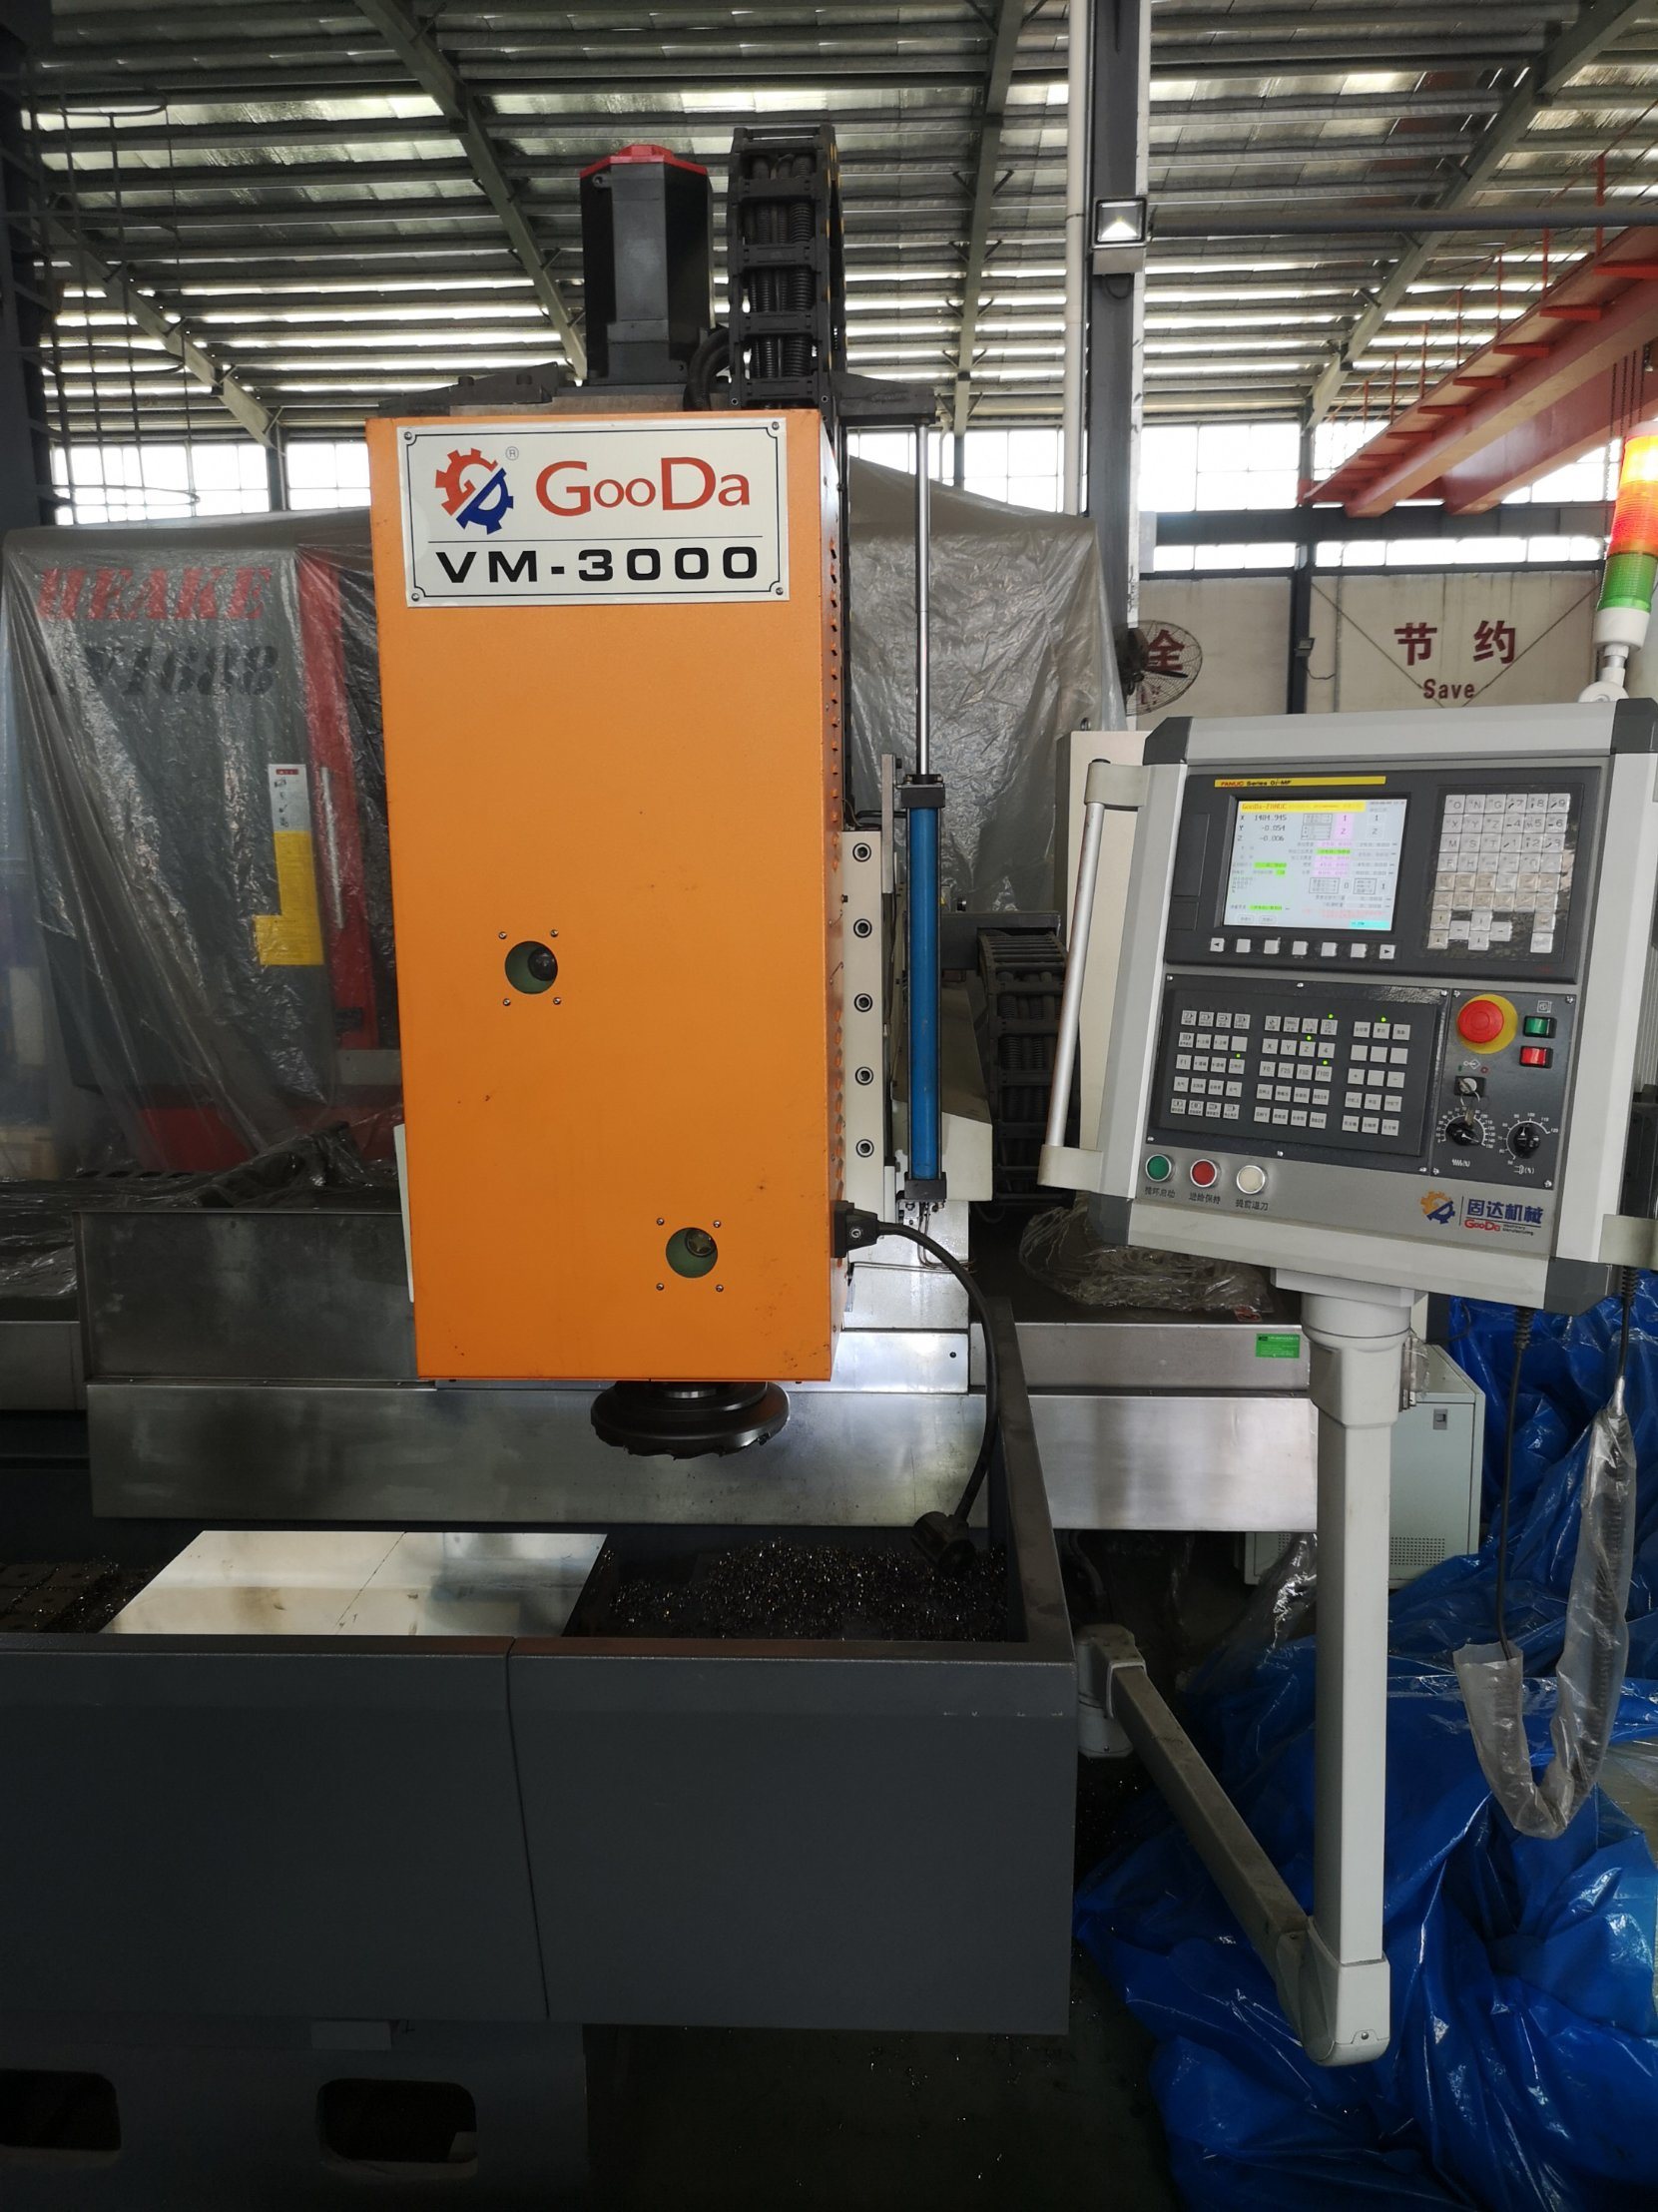 VM-3000 CNC Vertical Milling Machine From Gooda